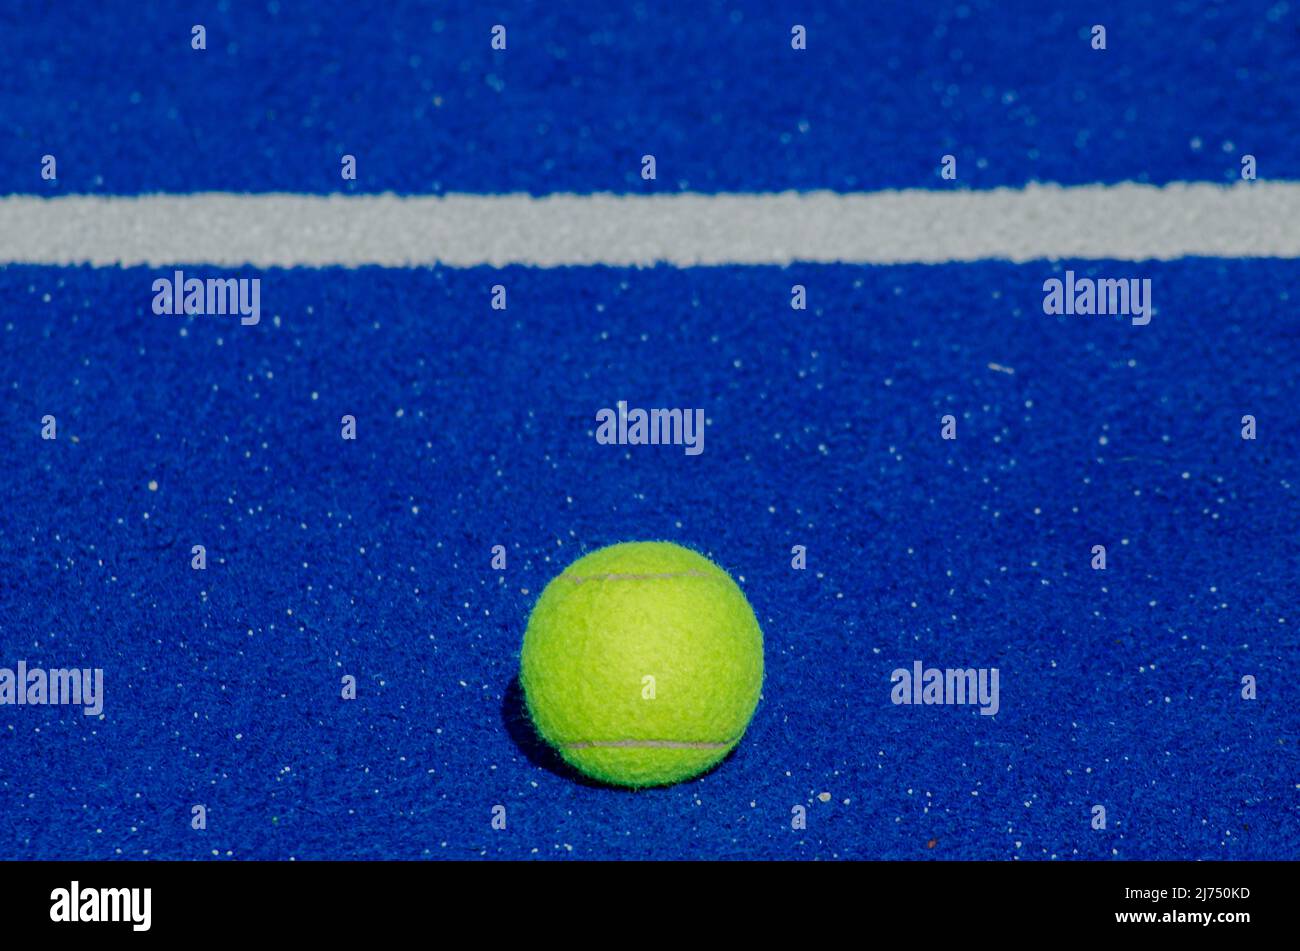 pista de tenis blue paddle, una bola solitaria cerca de la línea de base Foto de stock